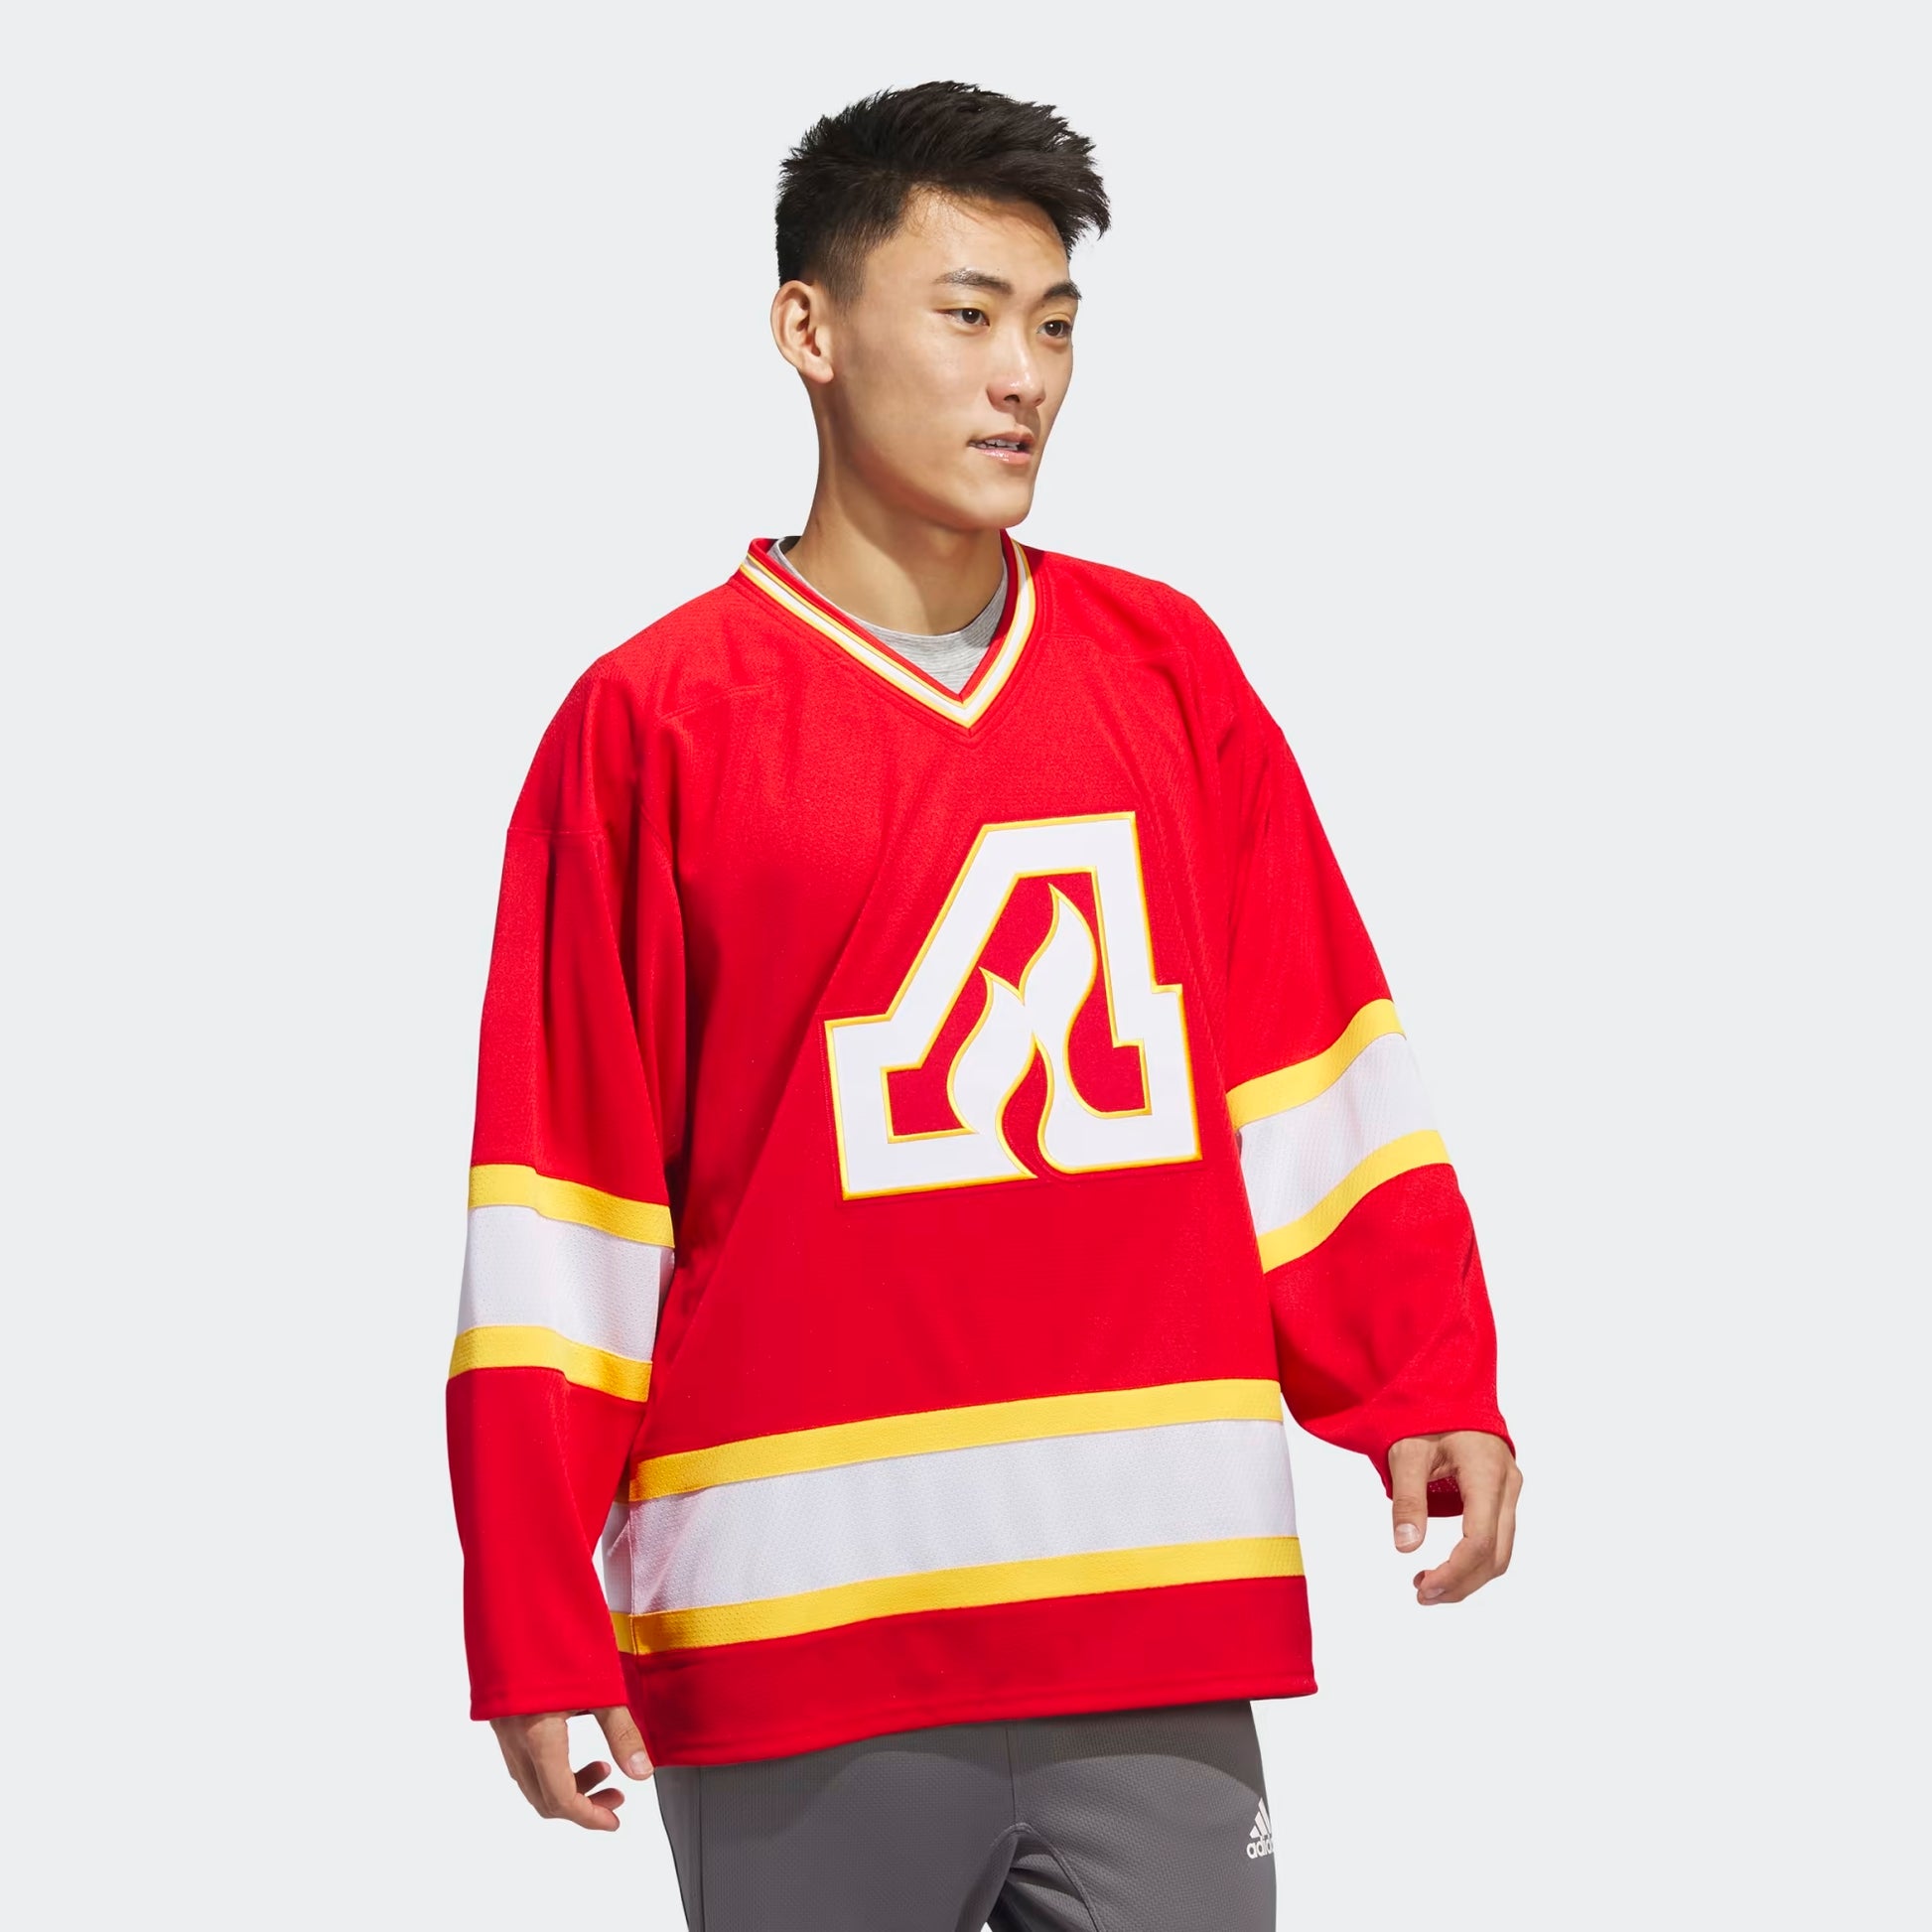 Adidas Authentic Atlanta Flames '73 Men's Team Classics Jersey - Leaside Hockey Shop Inc.